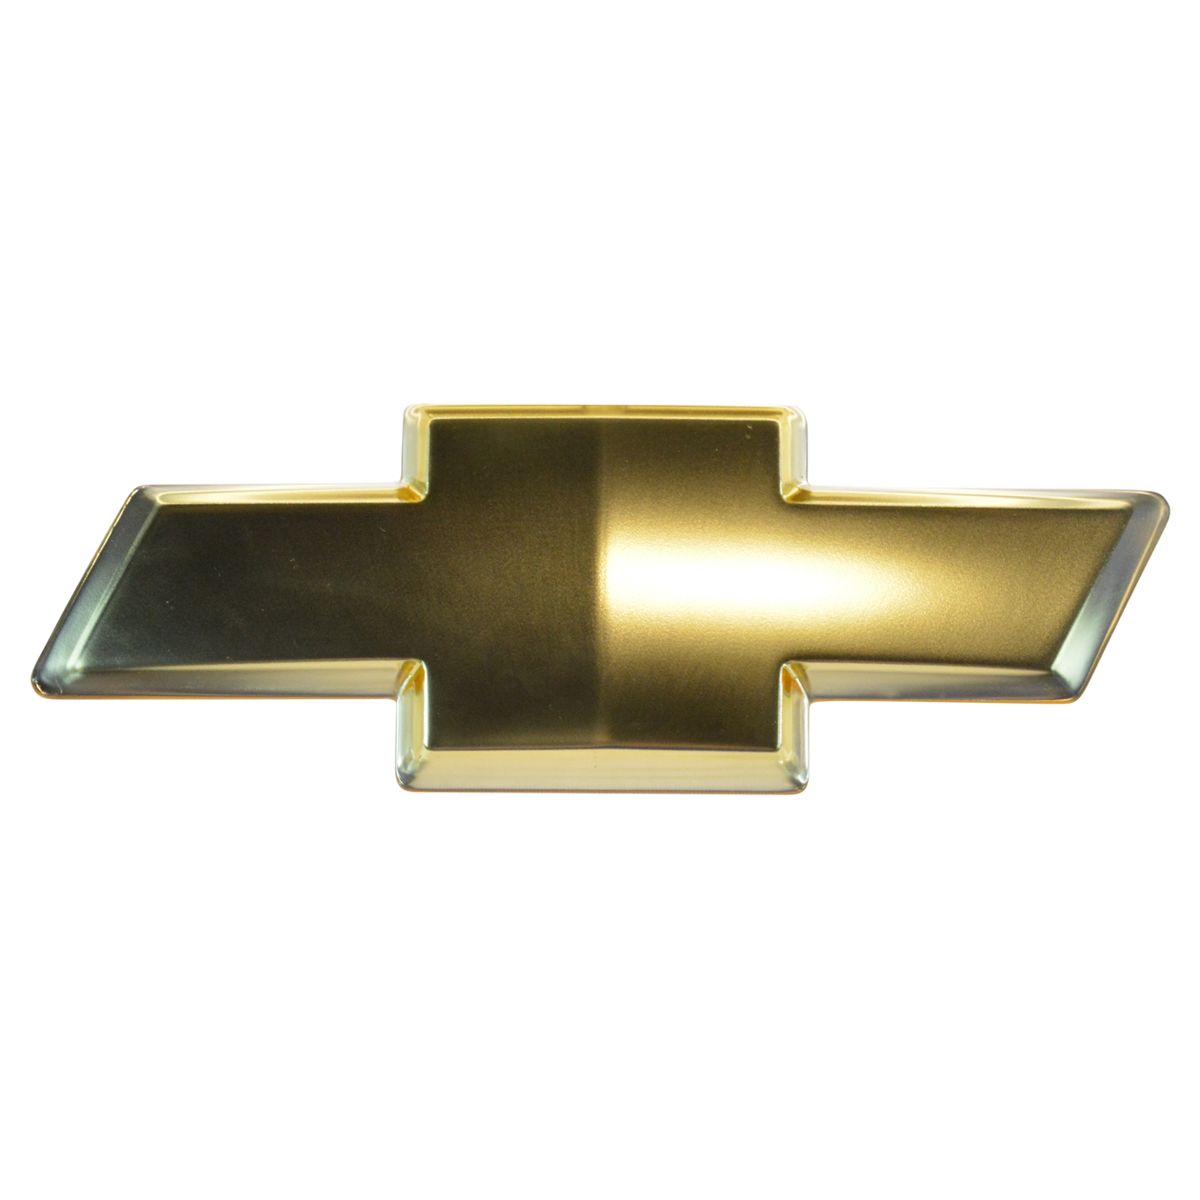 OEM 10357171 Bowtie Emblem Front Grille Gold for Chevy Colorado & Trailblazer